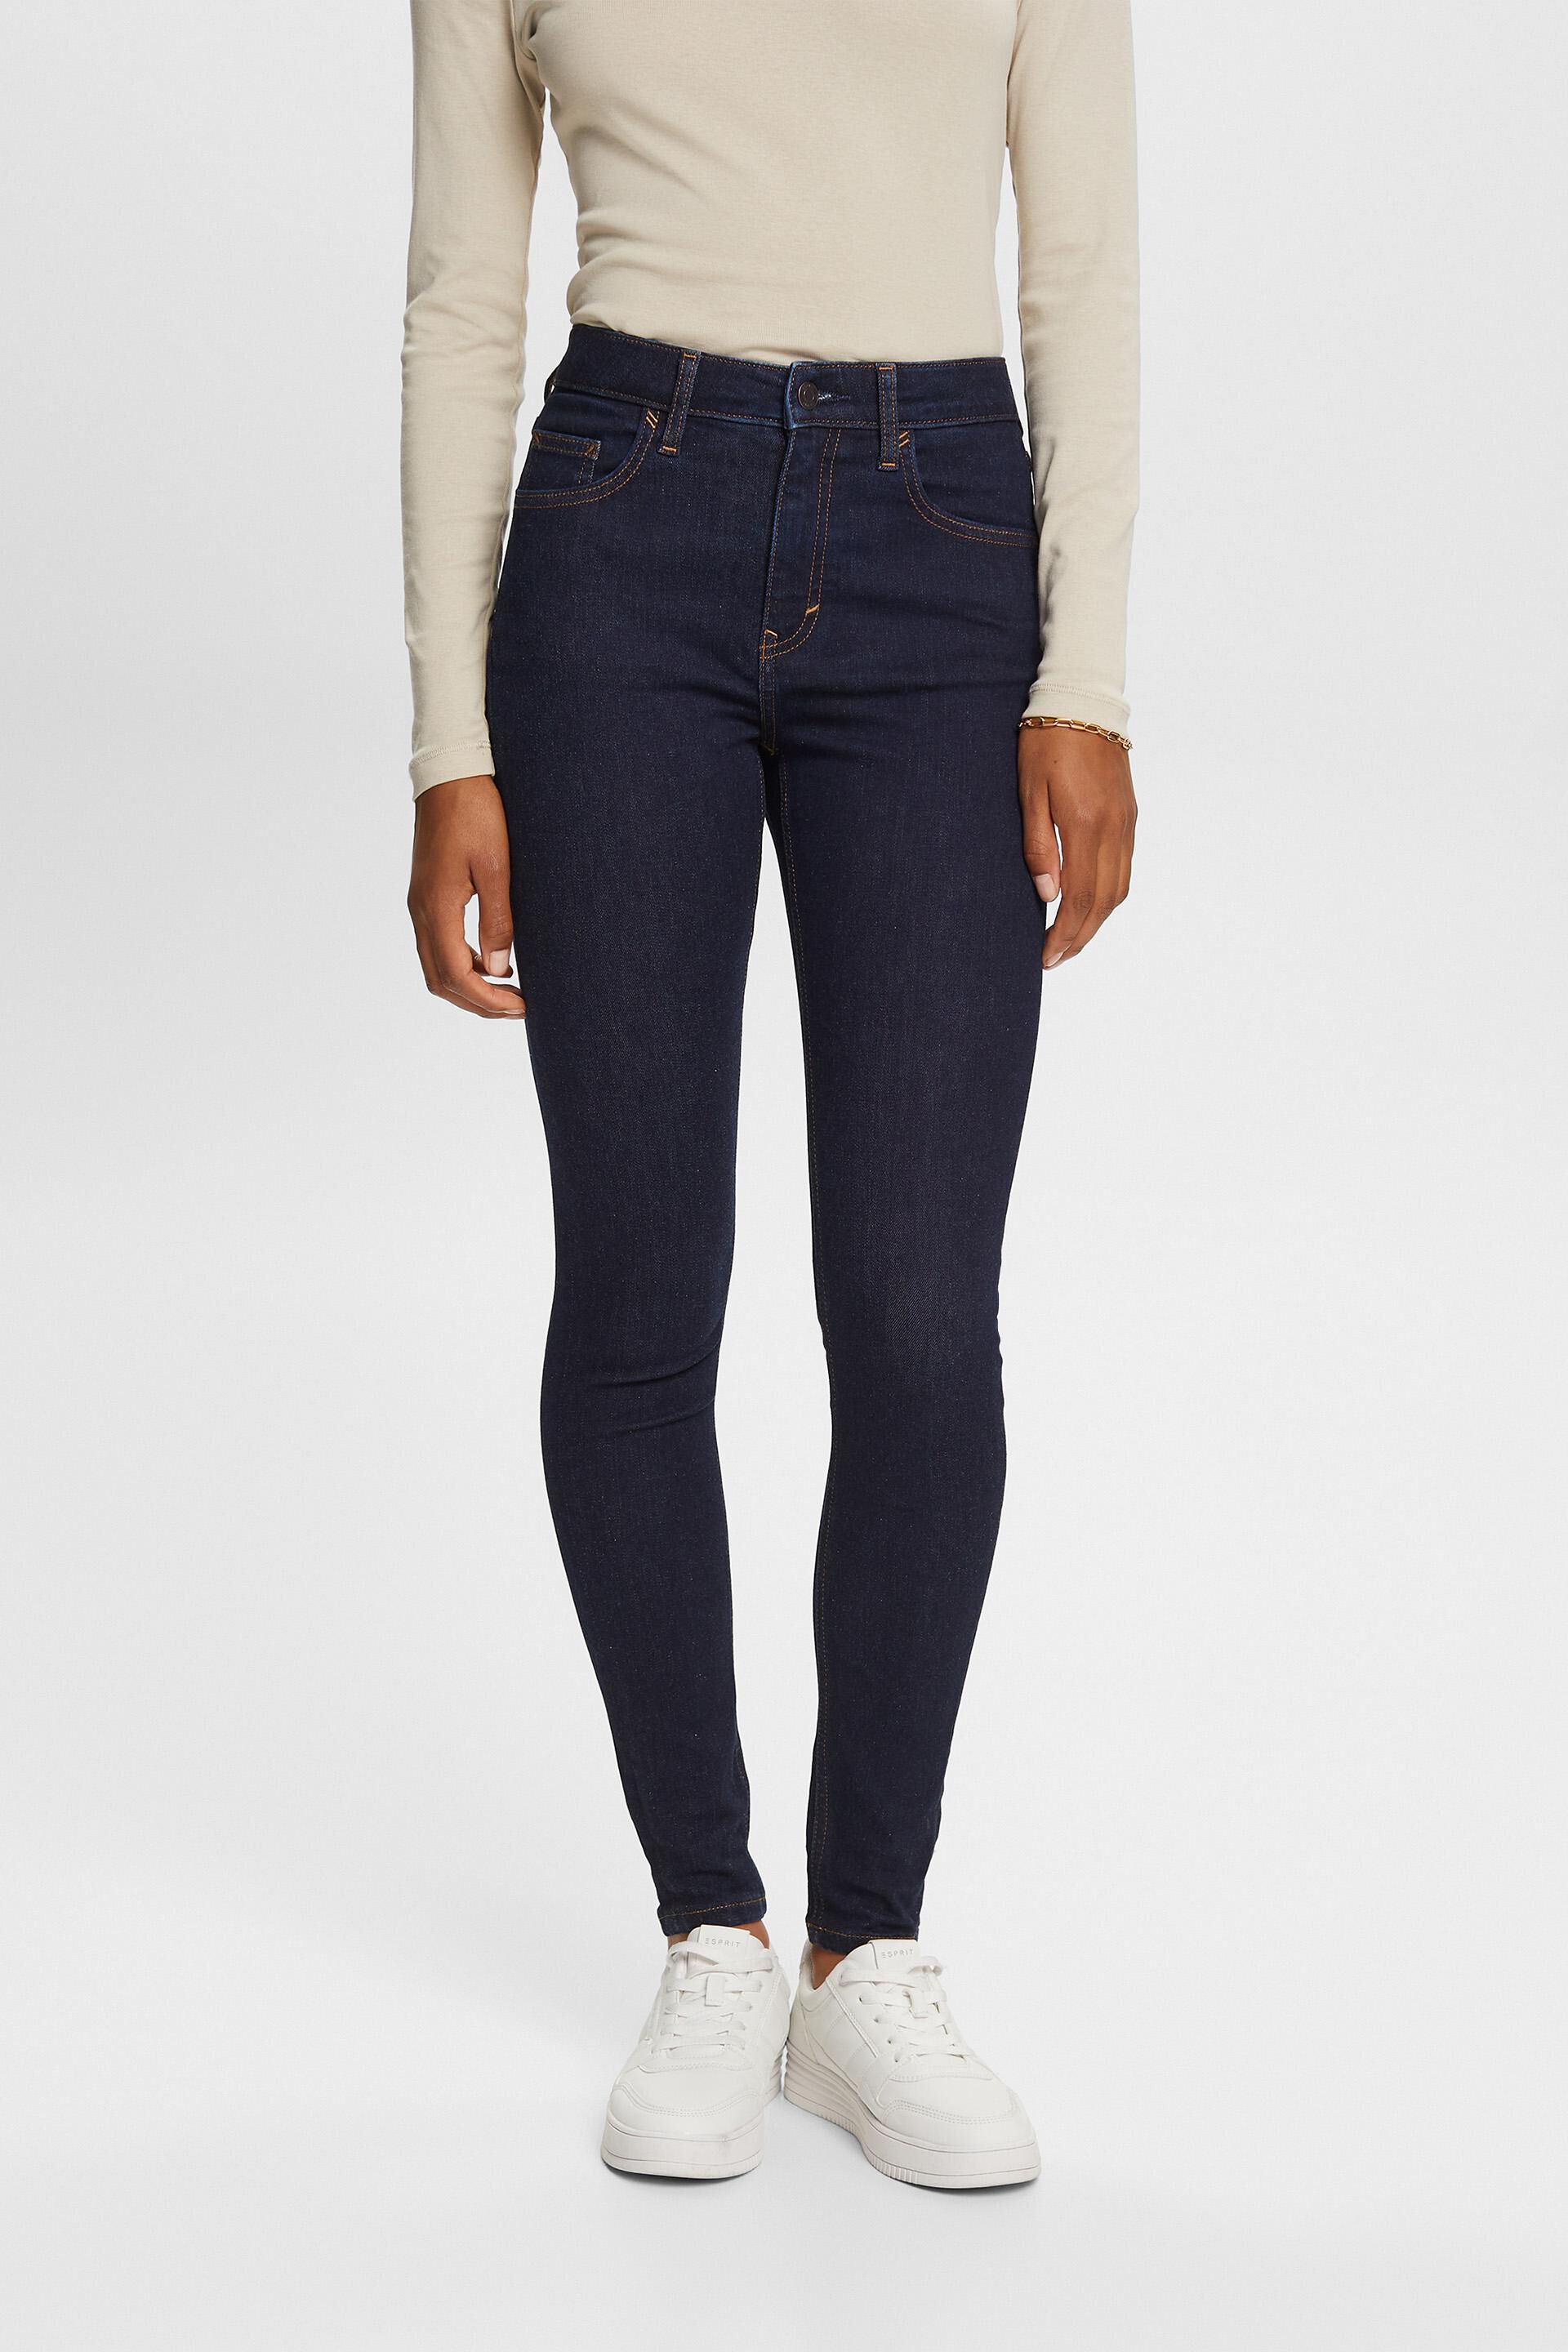 Esprit Highrise jeans, stretch skinny cotton